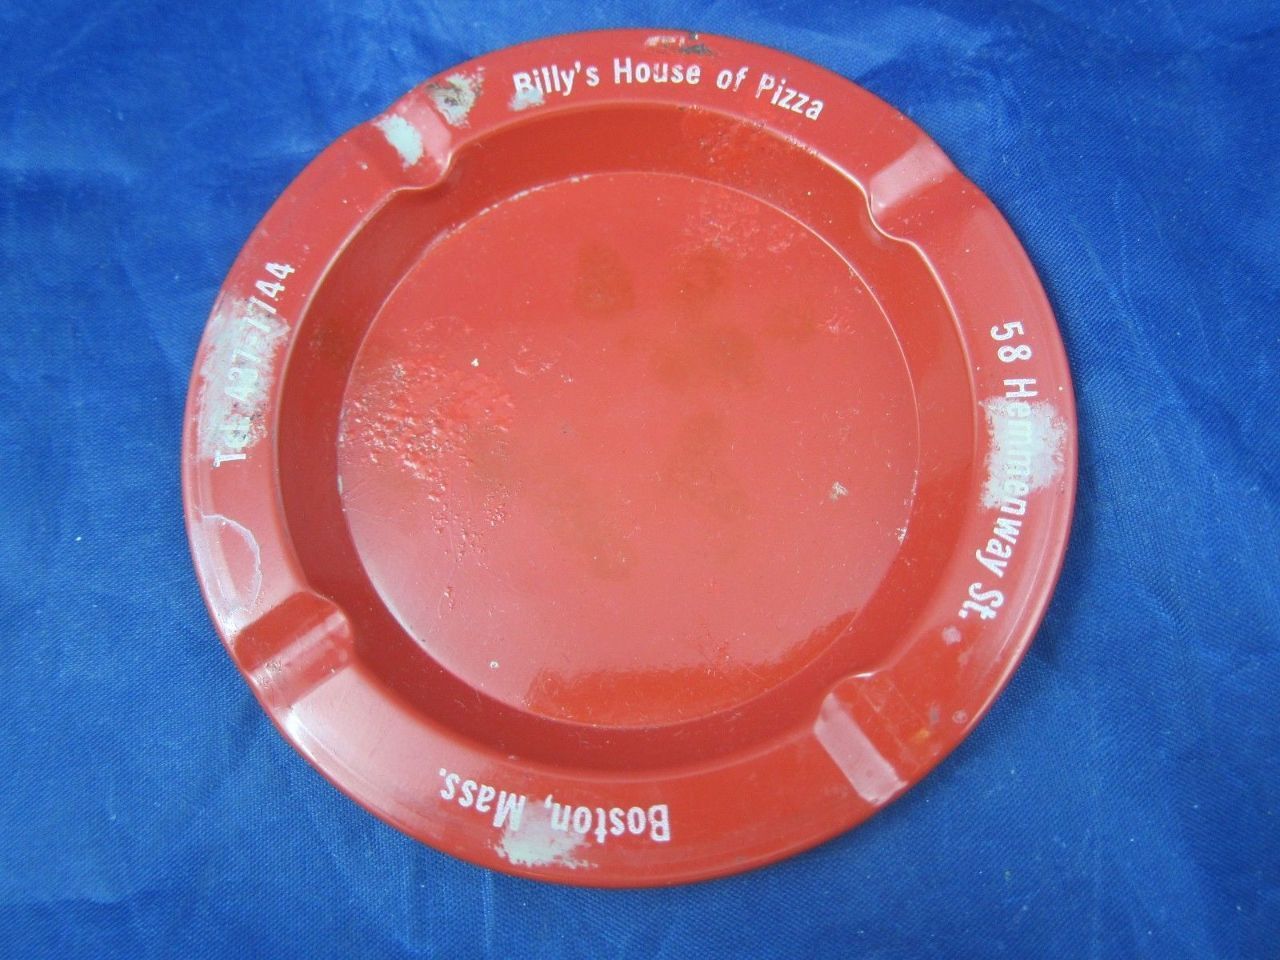 Vintage Billy's House of Pizza Boston Ashtray 58 Hemmenway Street Metal Ash Tray